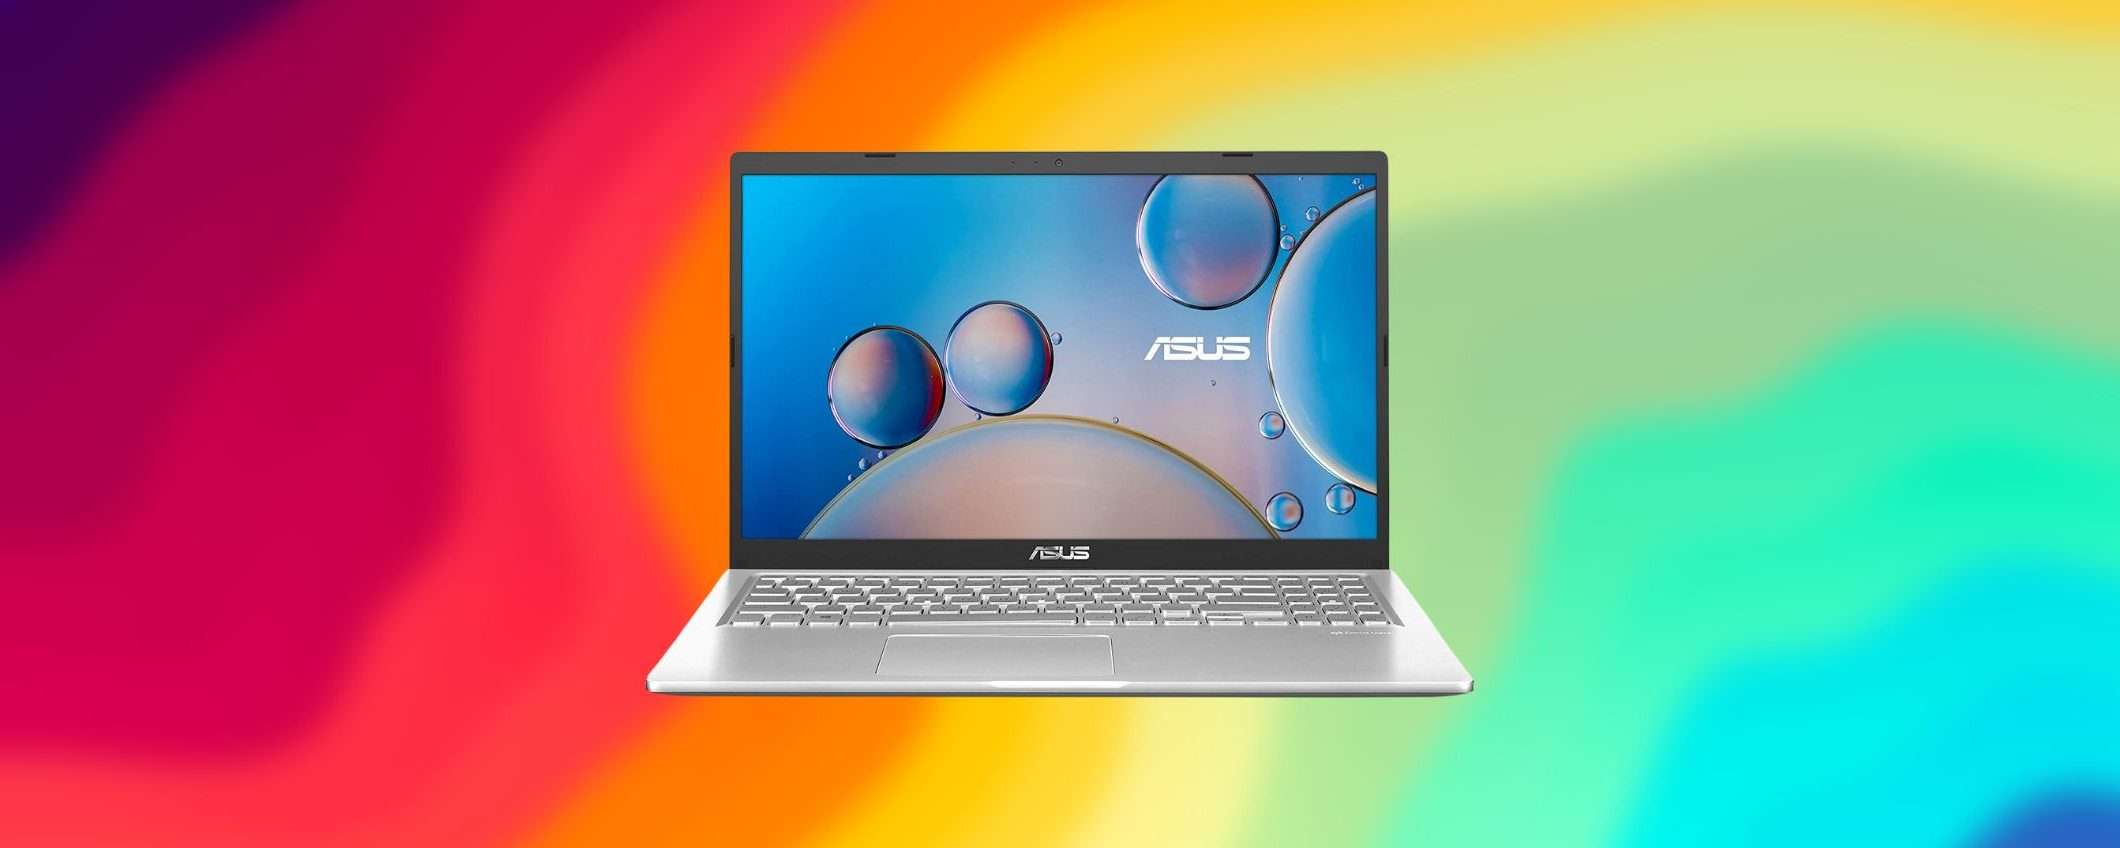 ASUS Laptop: minimo storico ASSURDO, lo paghi solo 299€ (-130€)